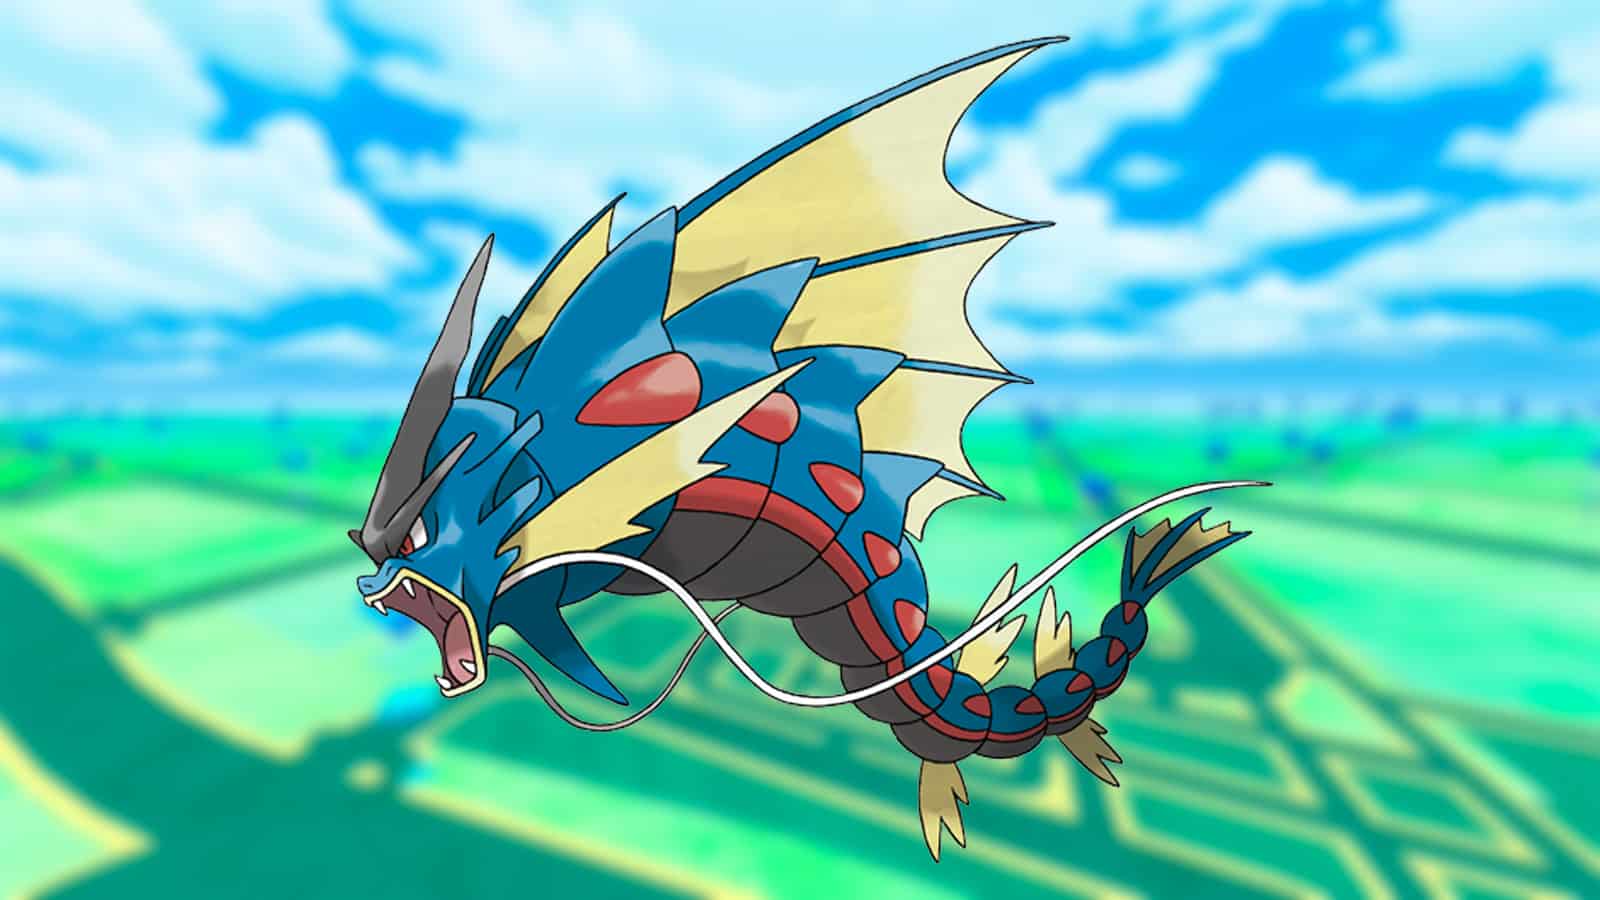 Catching these wild shiny pokemon and mega-evolving them Part 3